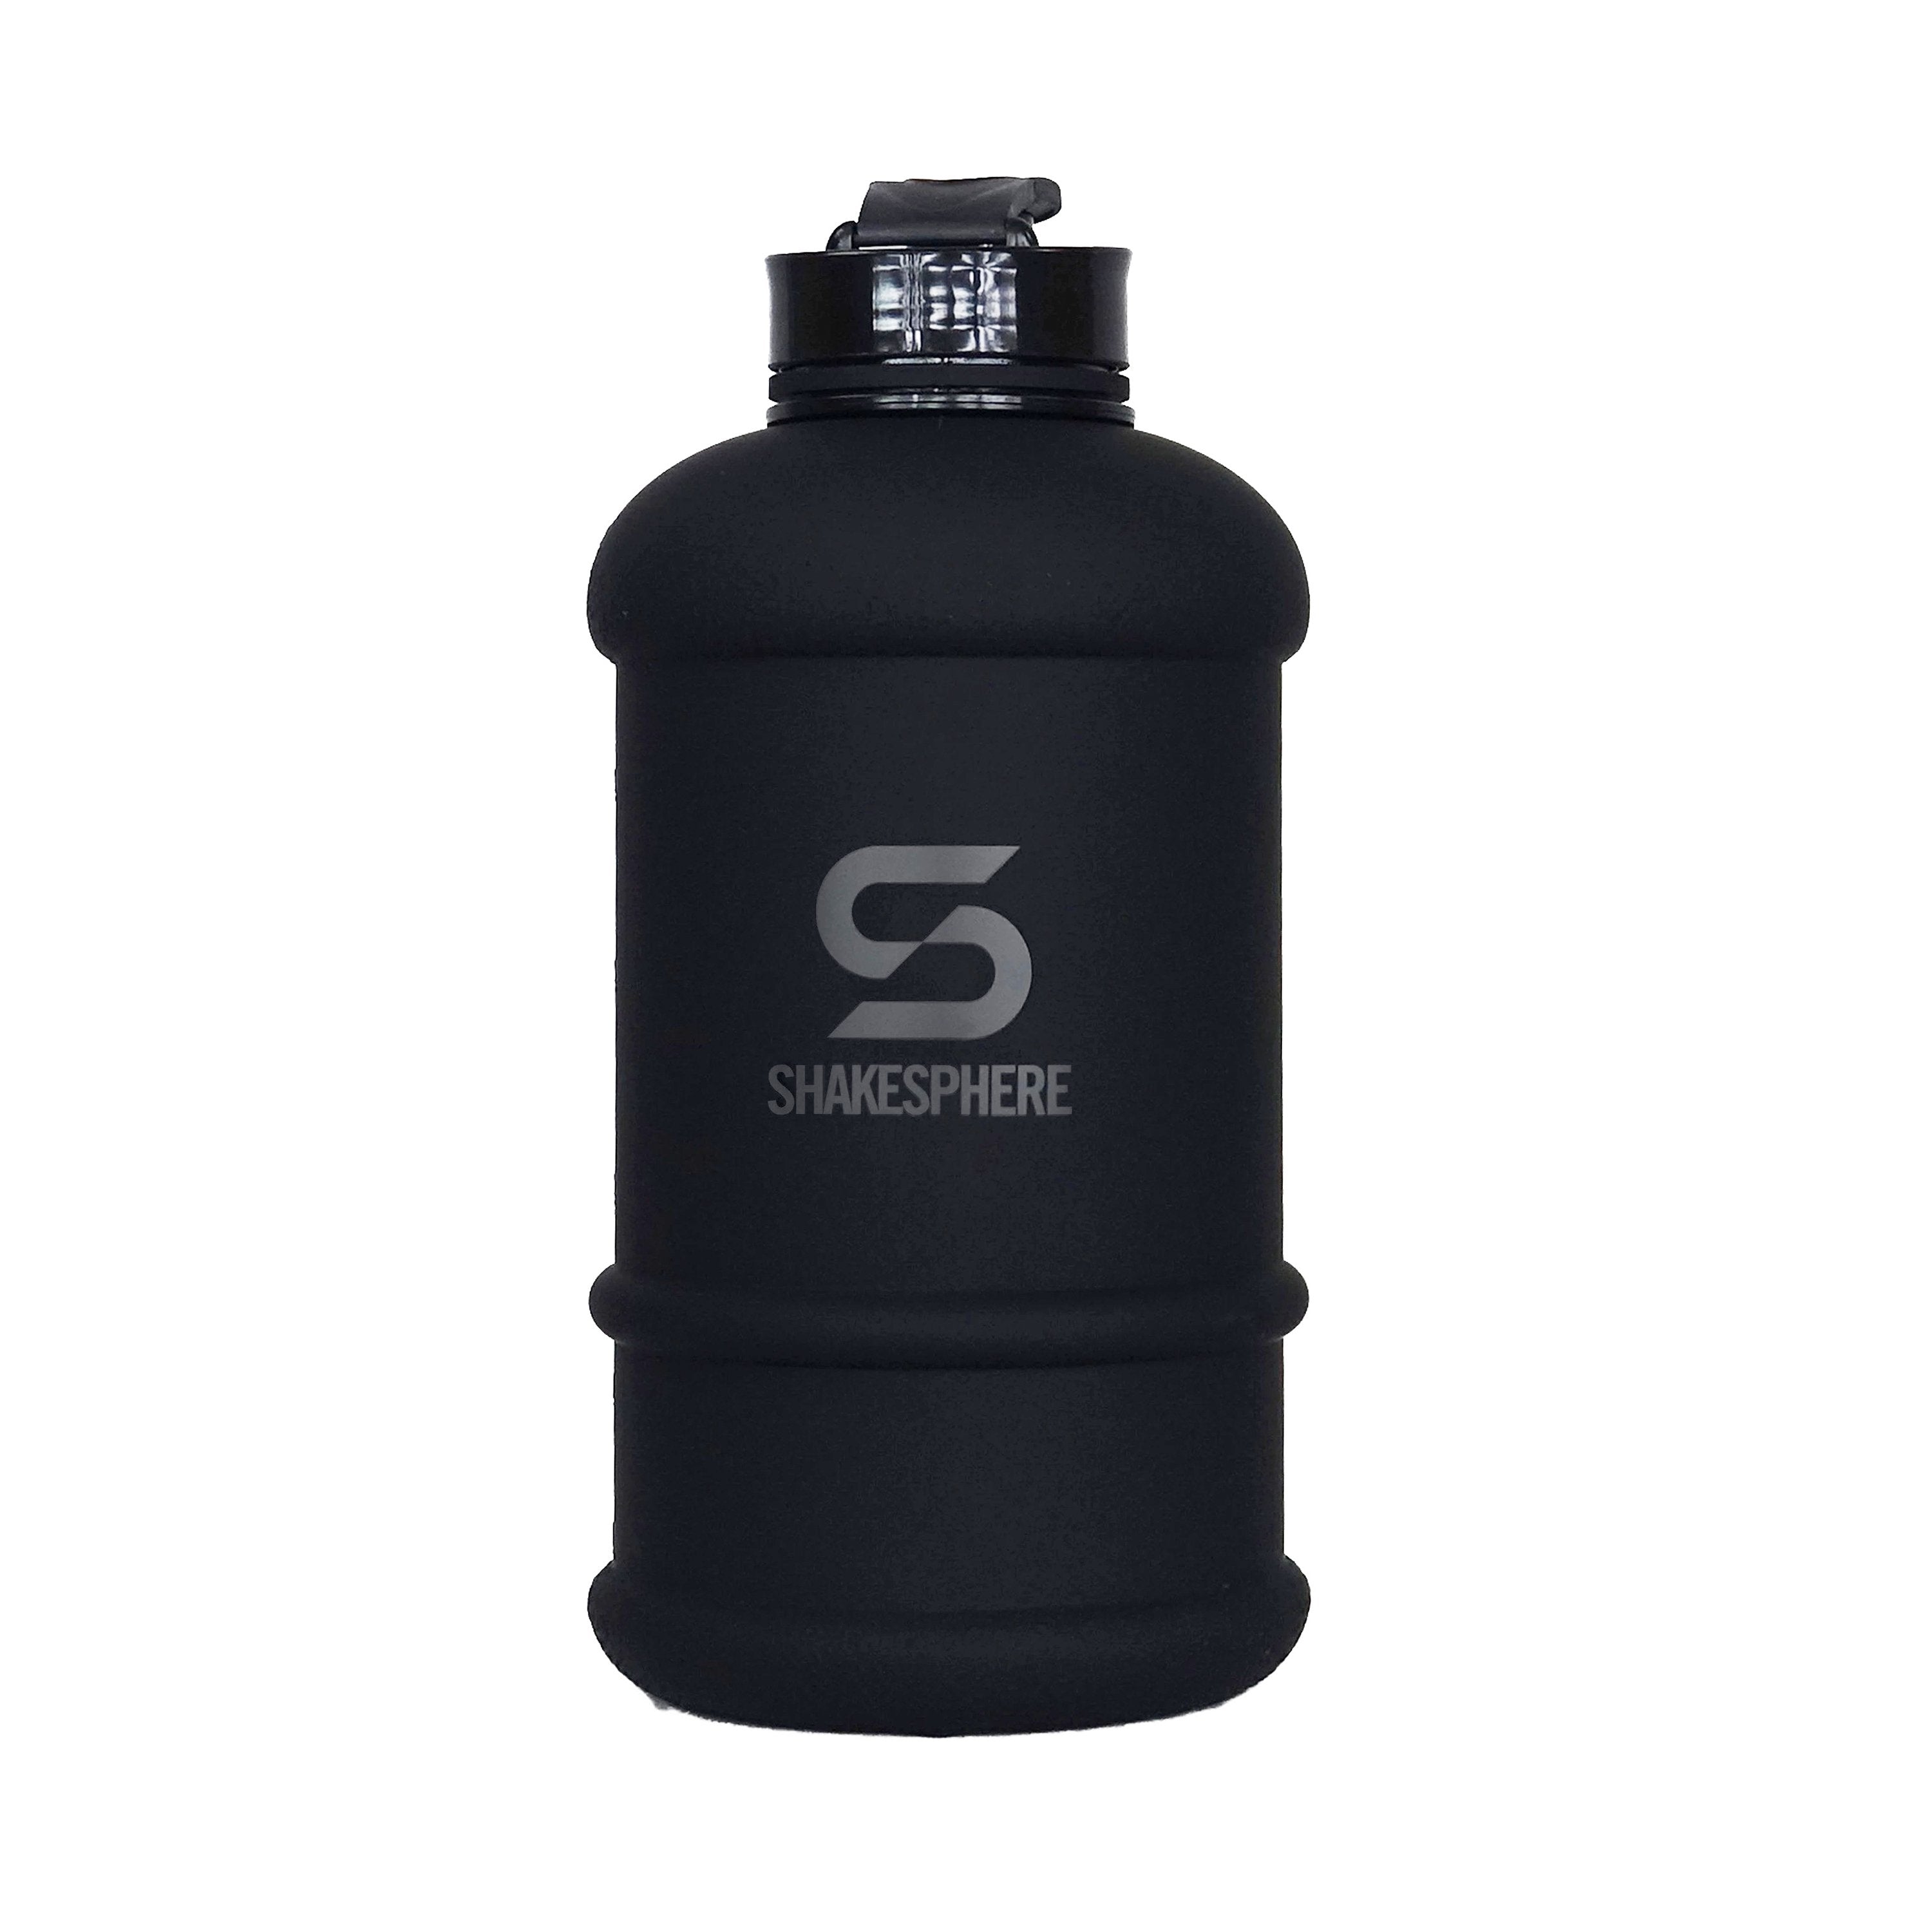 ShakeSphere Hydration Jug 1.35L